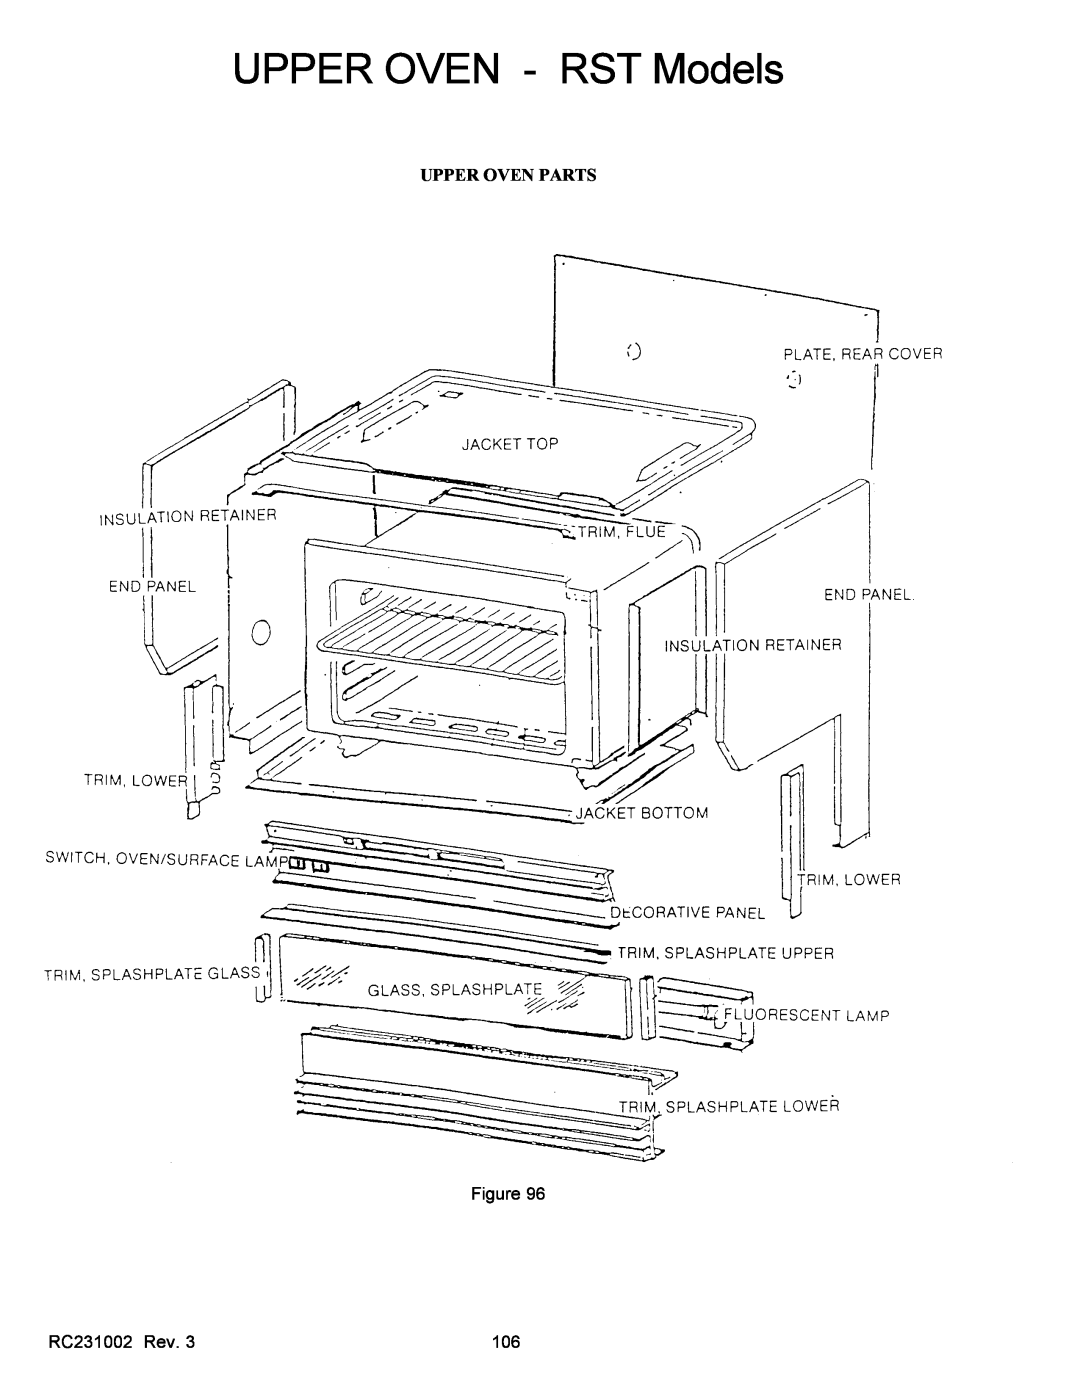 Amana RSS service manual Upper Oven Parts, UPPER OVEN - RST Models 